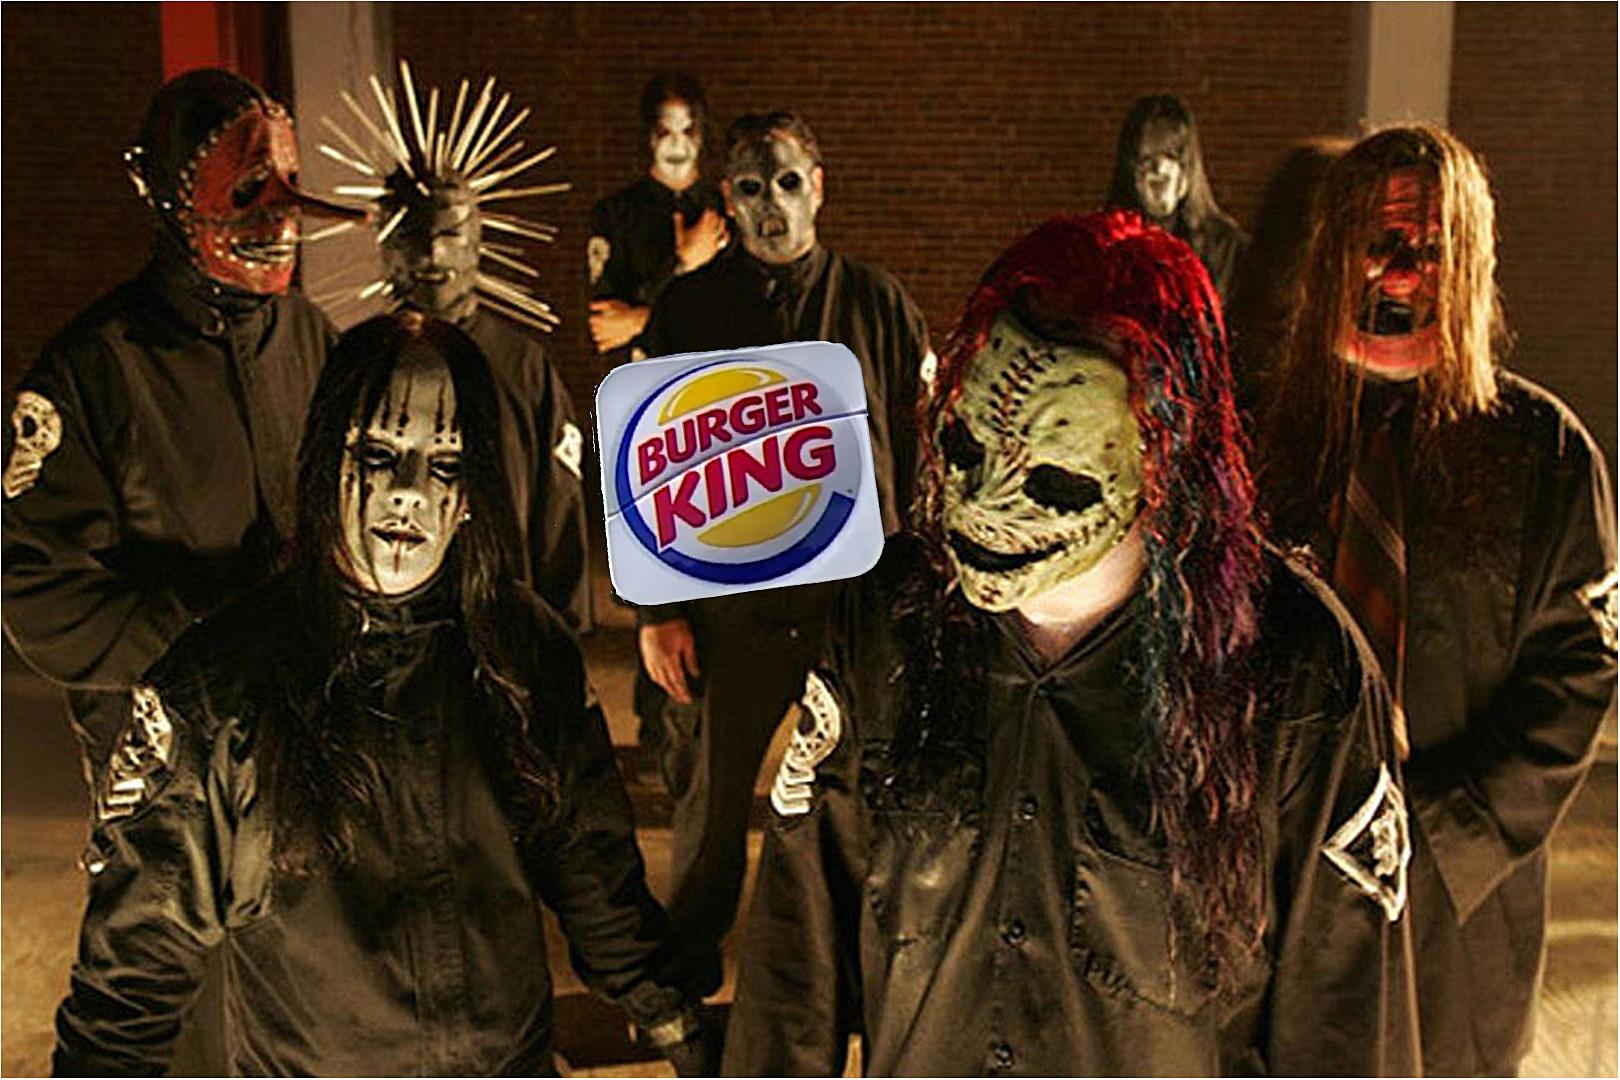 Remember When Slipknot Sued Burger King?